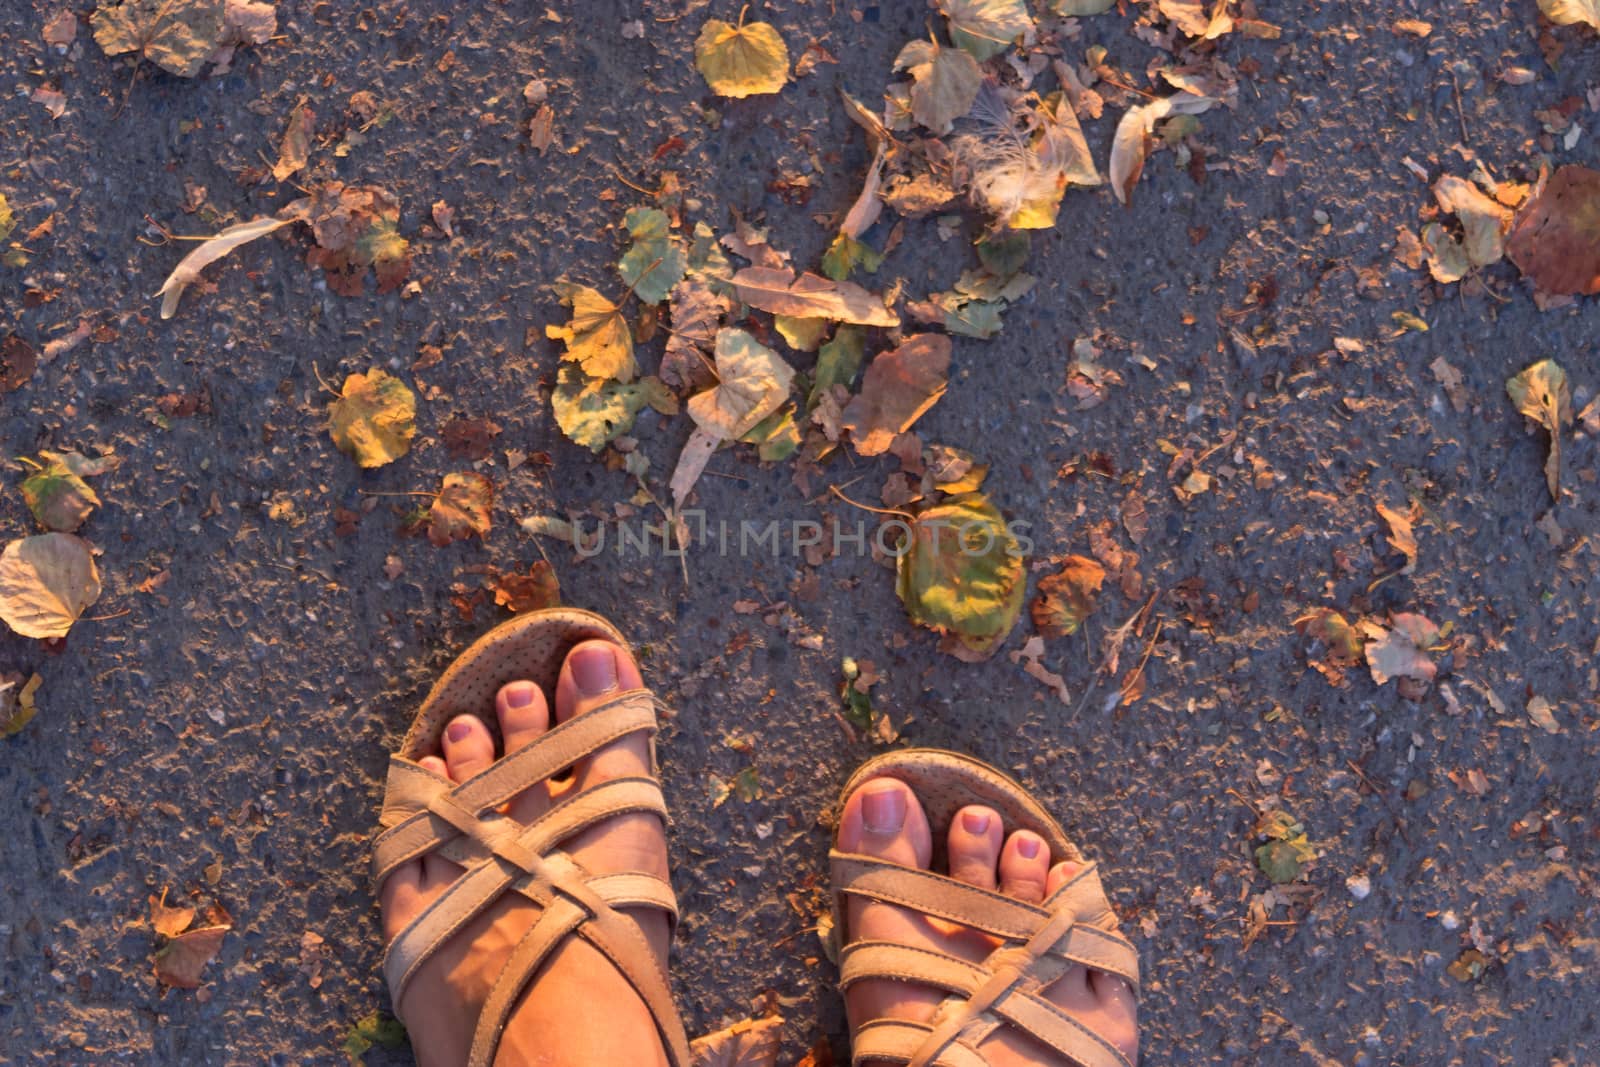 feet in sandals on asphalt, autumn leaves